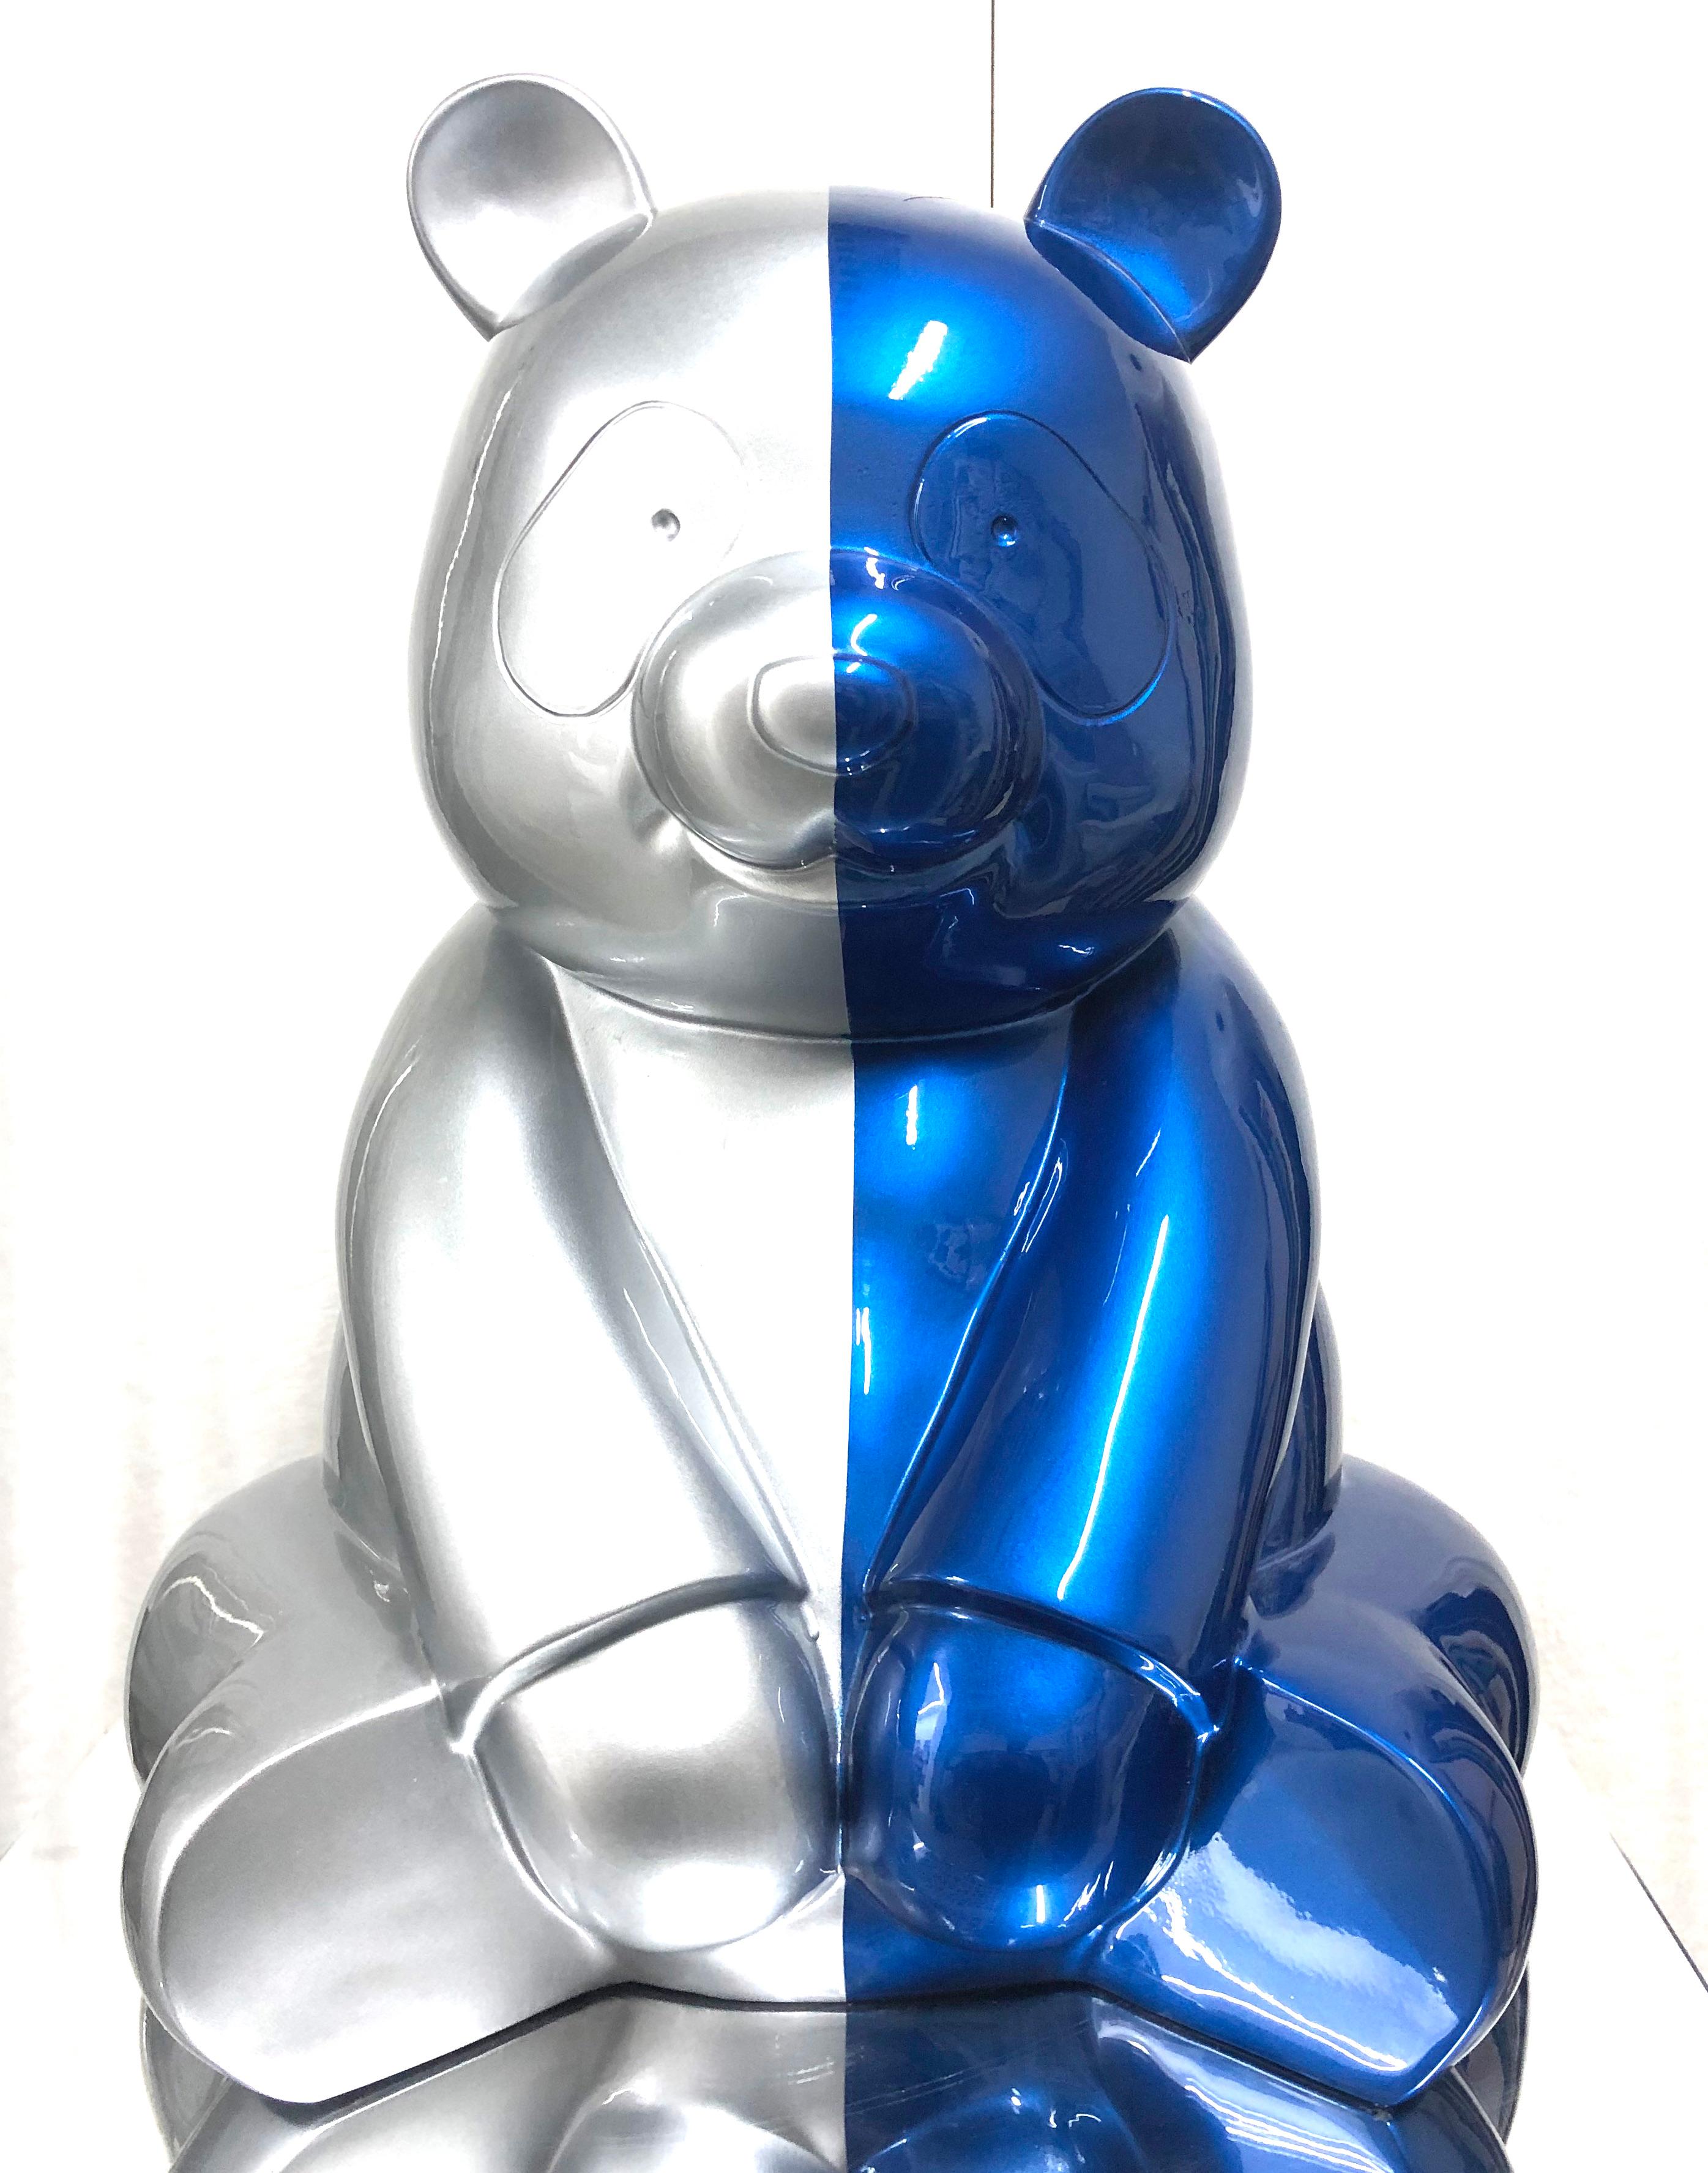 Vereinigte Pandasan  Spectral Symmetrie: Blau & Silber – Sculpture von HIRO ANDO